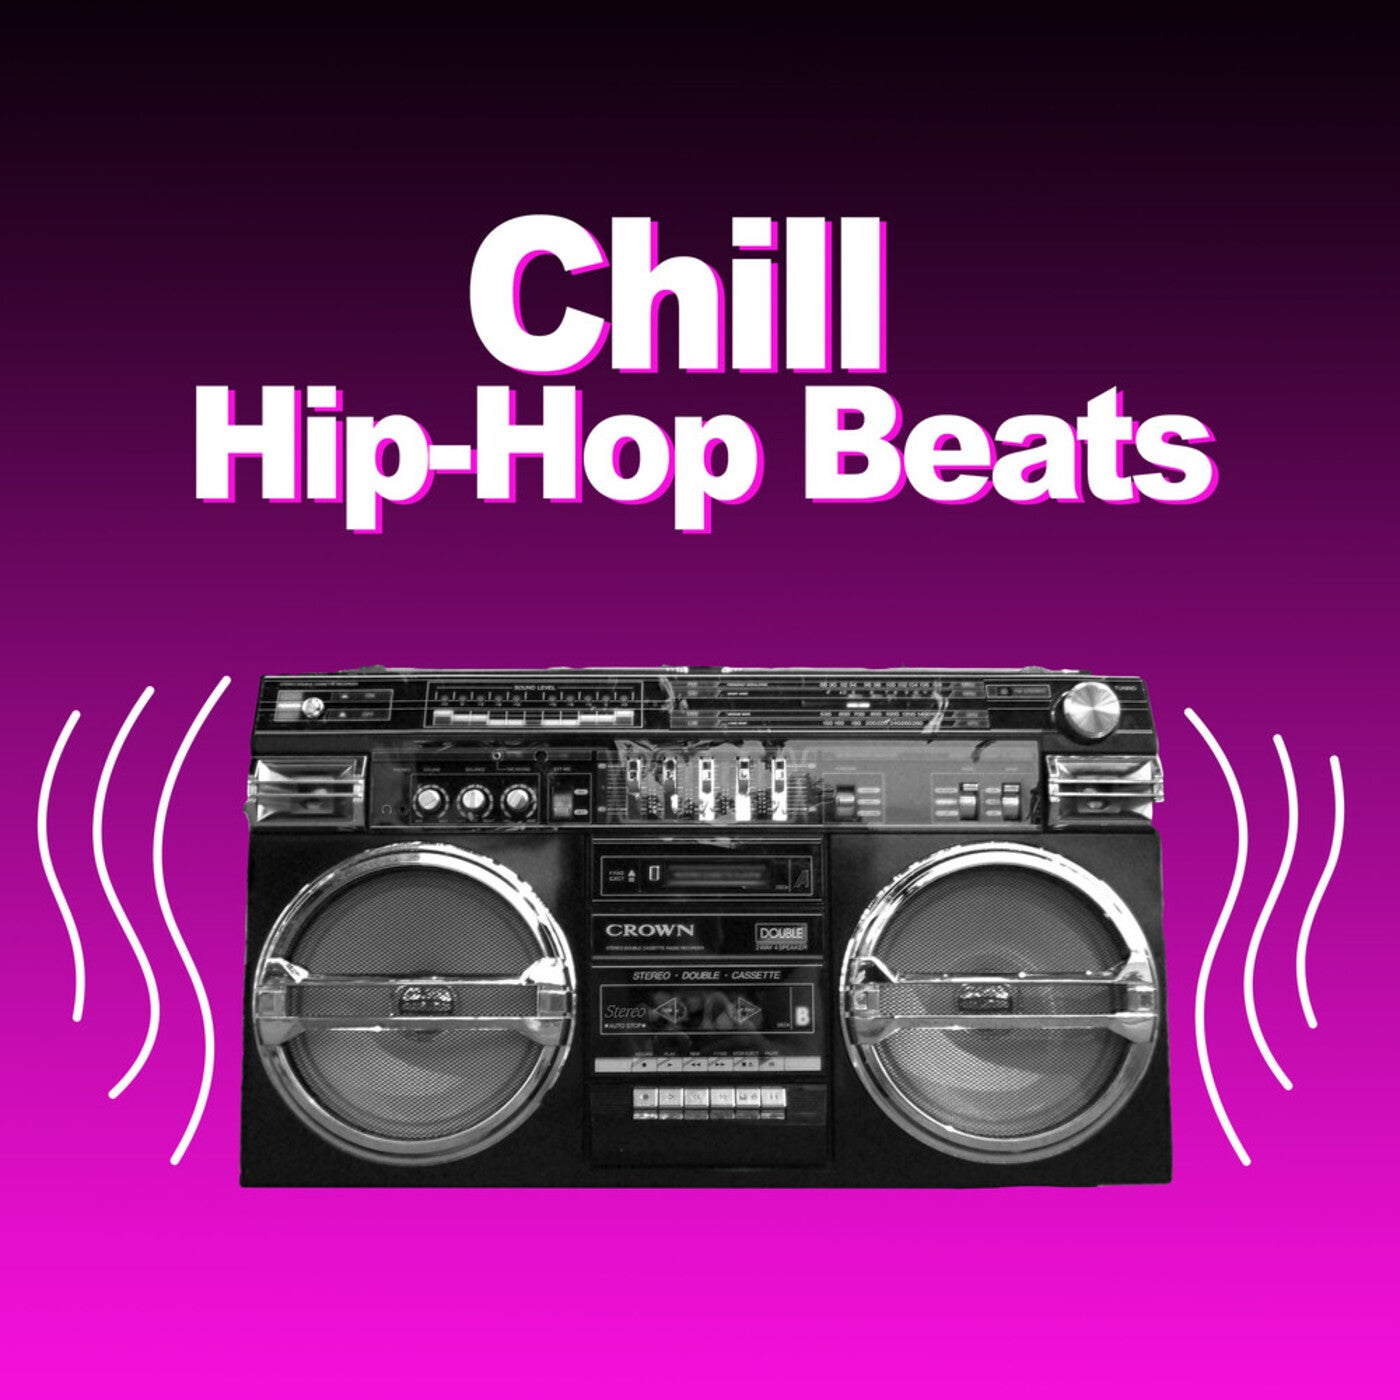 Hip-Hop Highlights by Ali Theodore, Jordan Yaeger, Nicholas Loizides and Lee on Beatsource